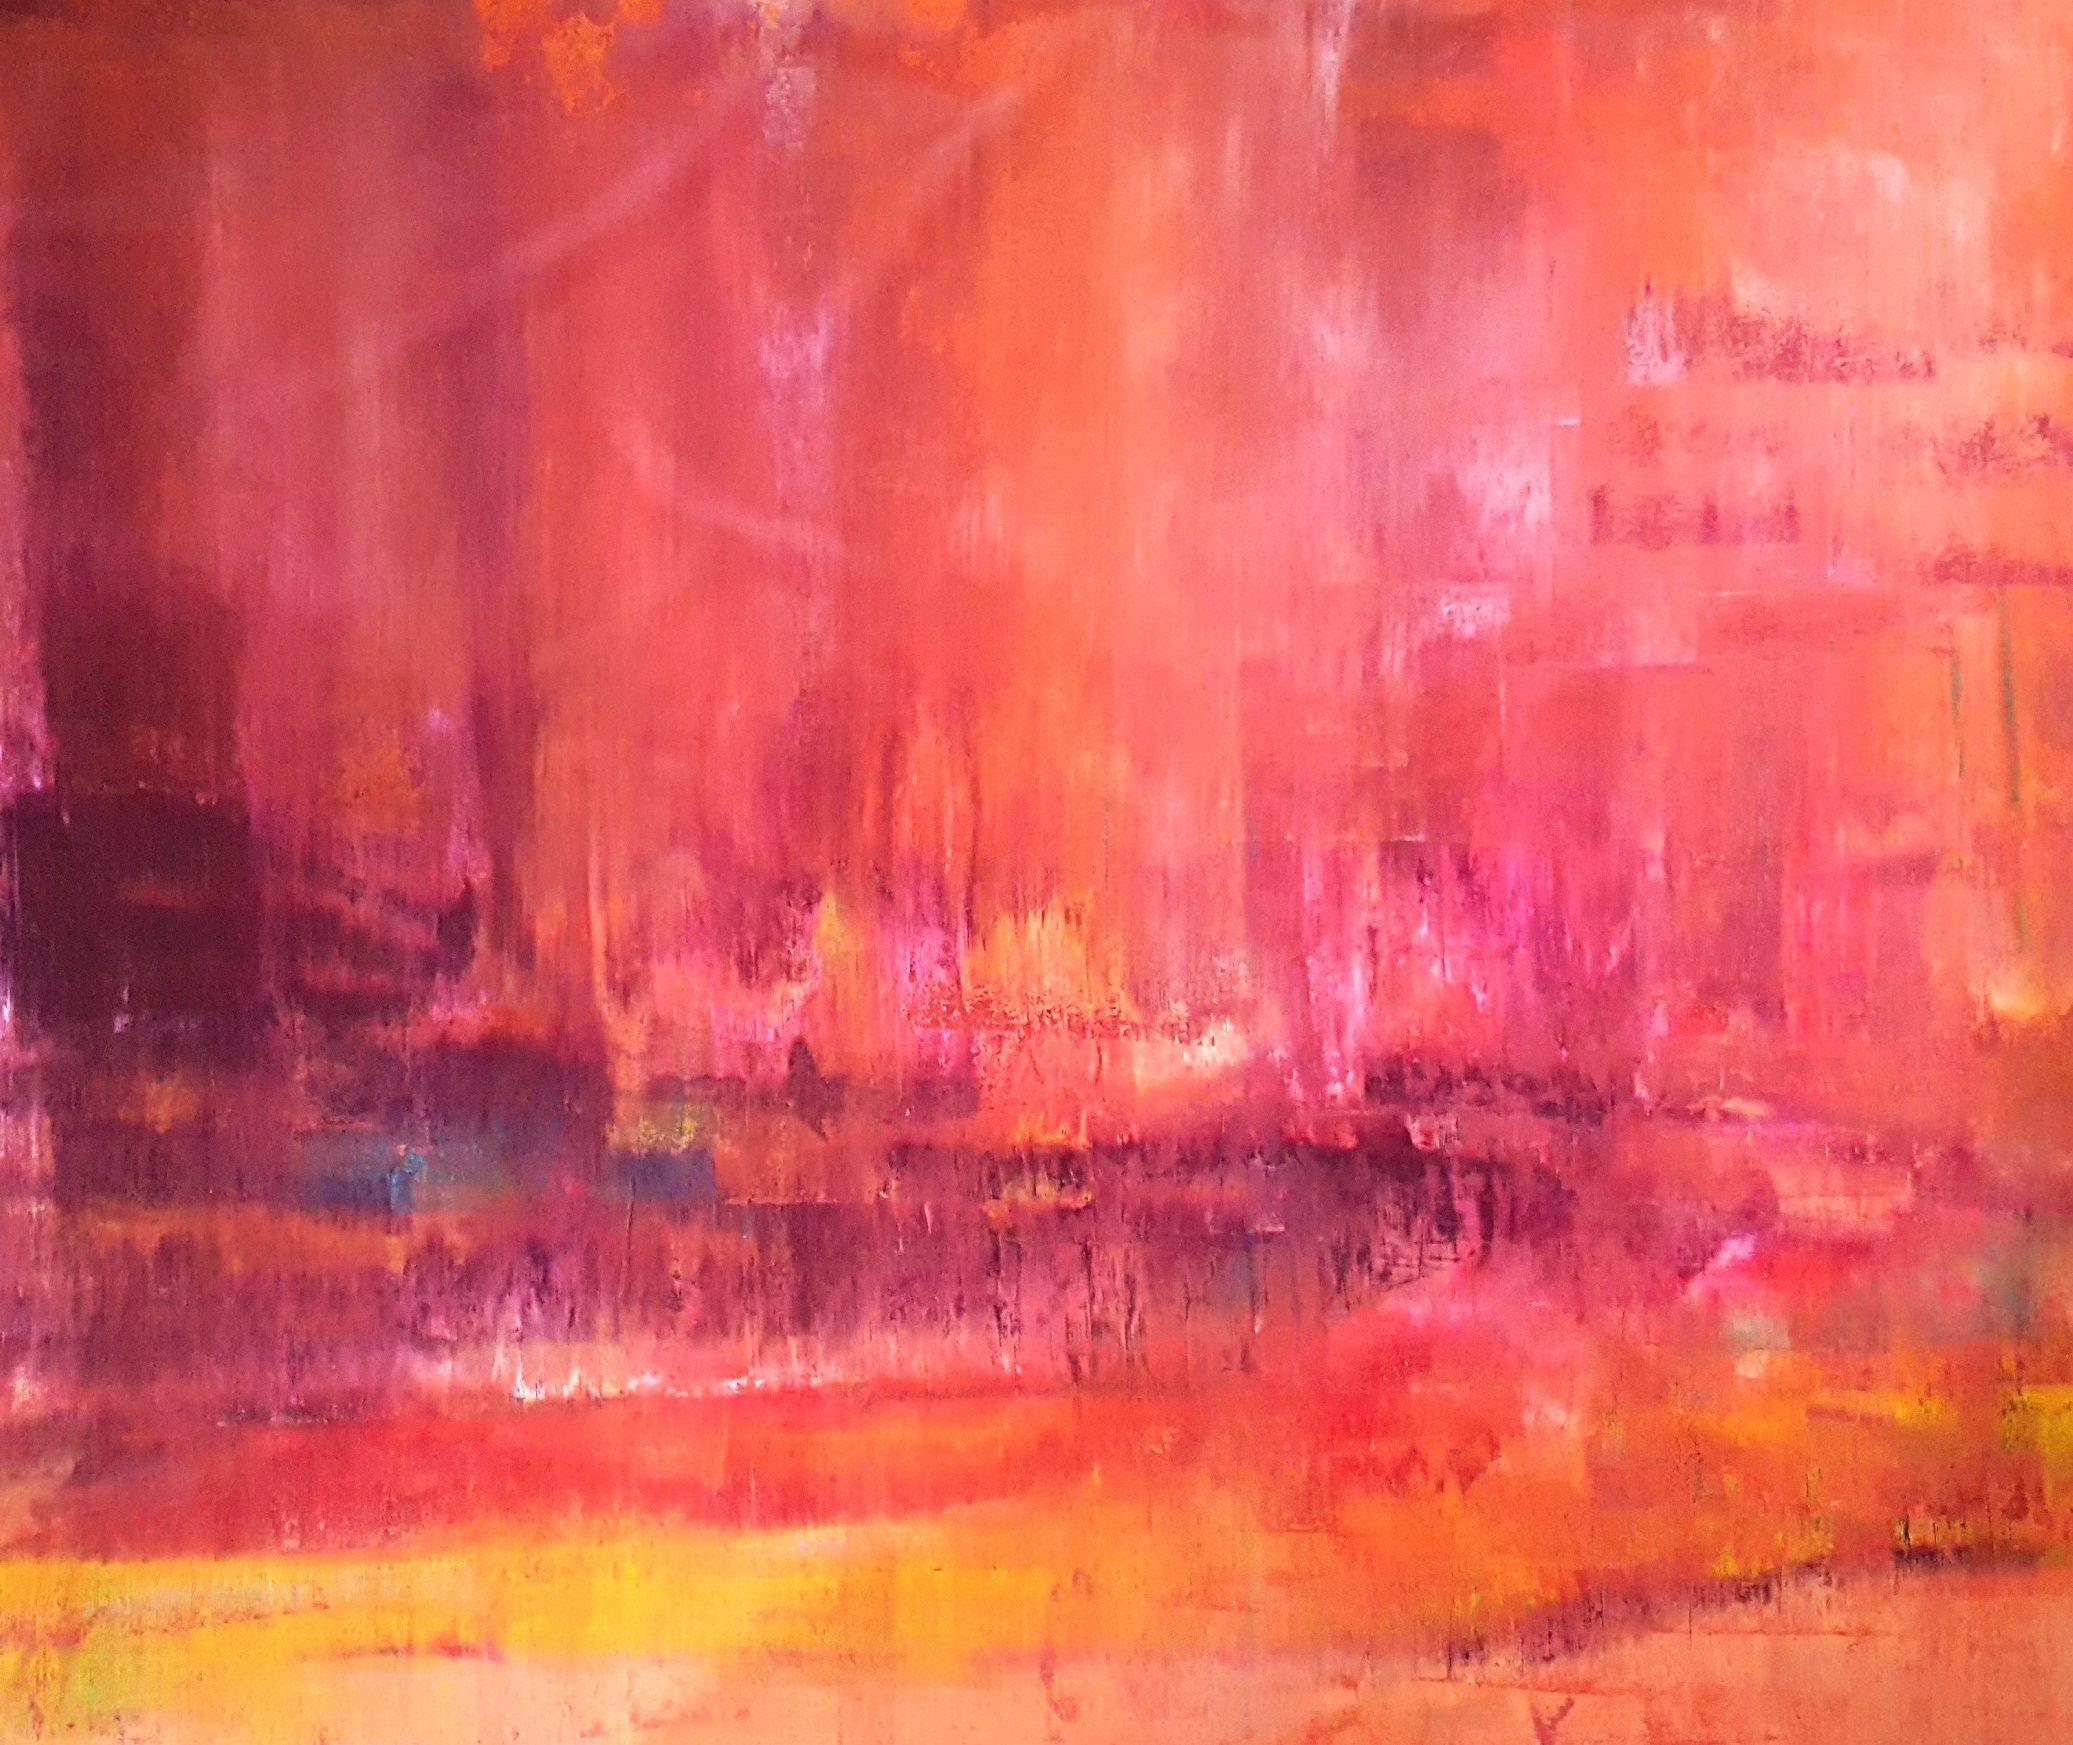 Abstract Painting Ivana Olbricht - Magic of the spring rain - XL paysage abstrait, peinture, acrylique sur toile